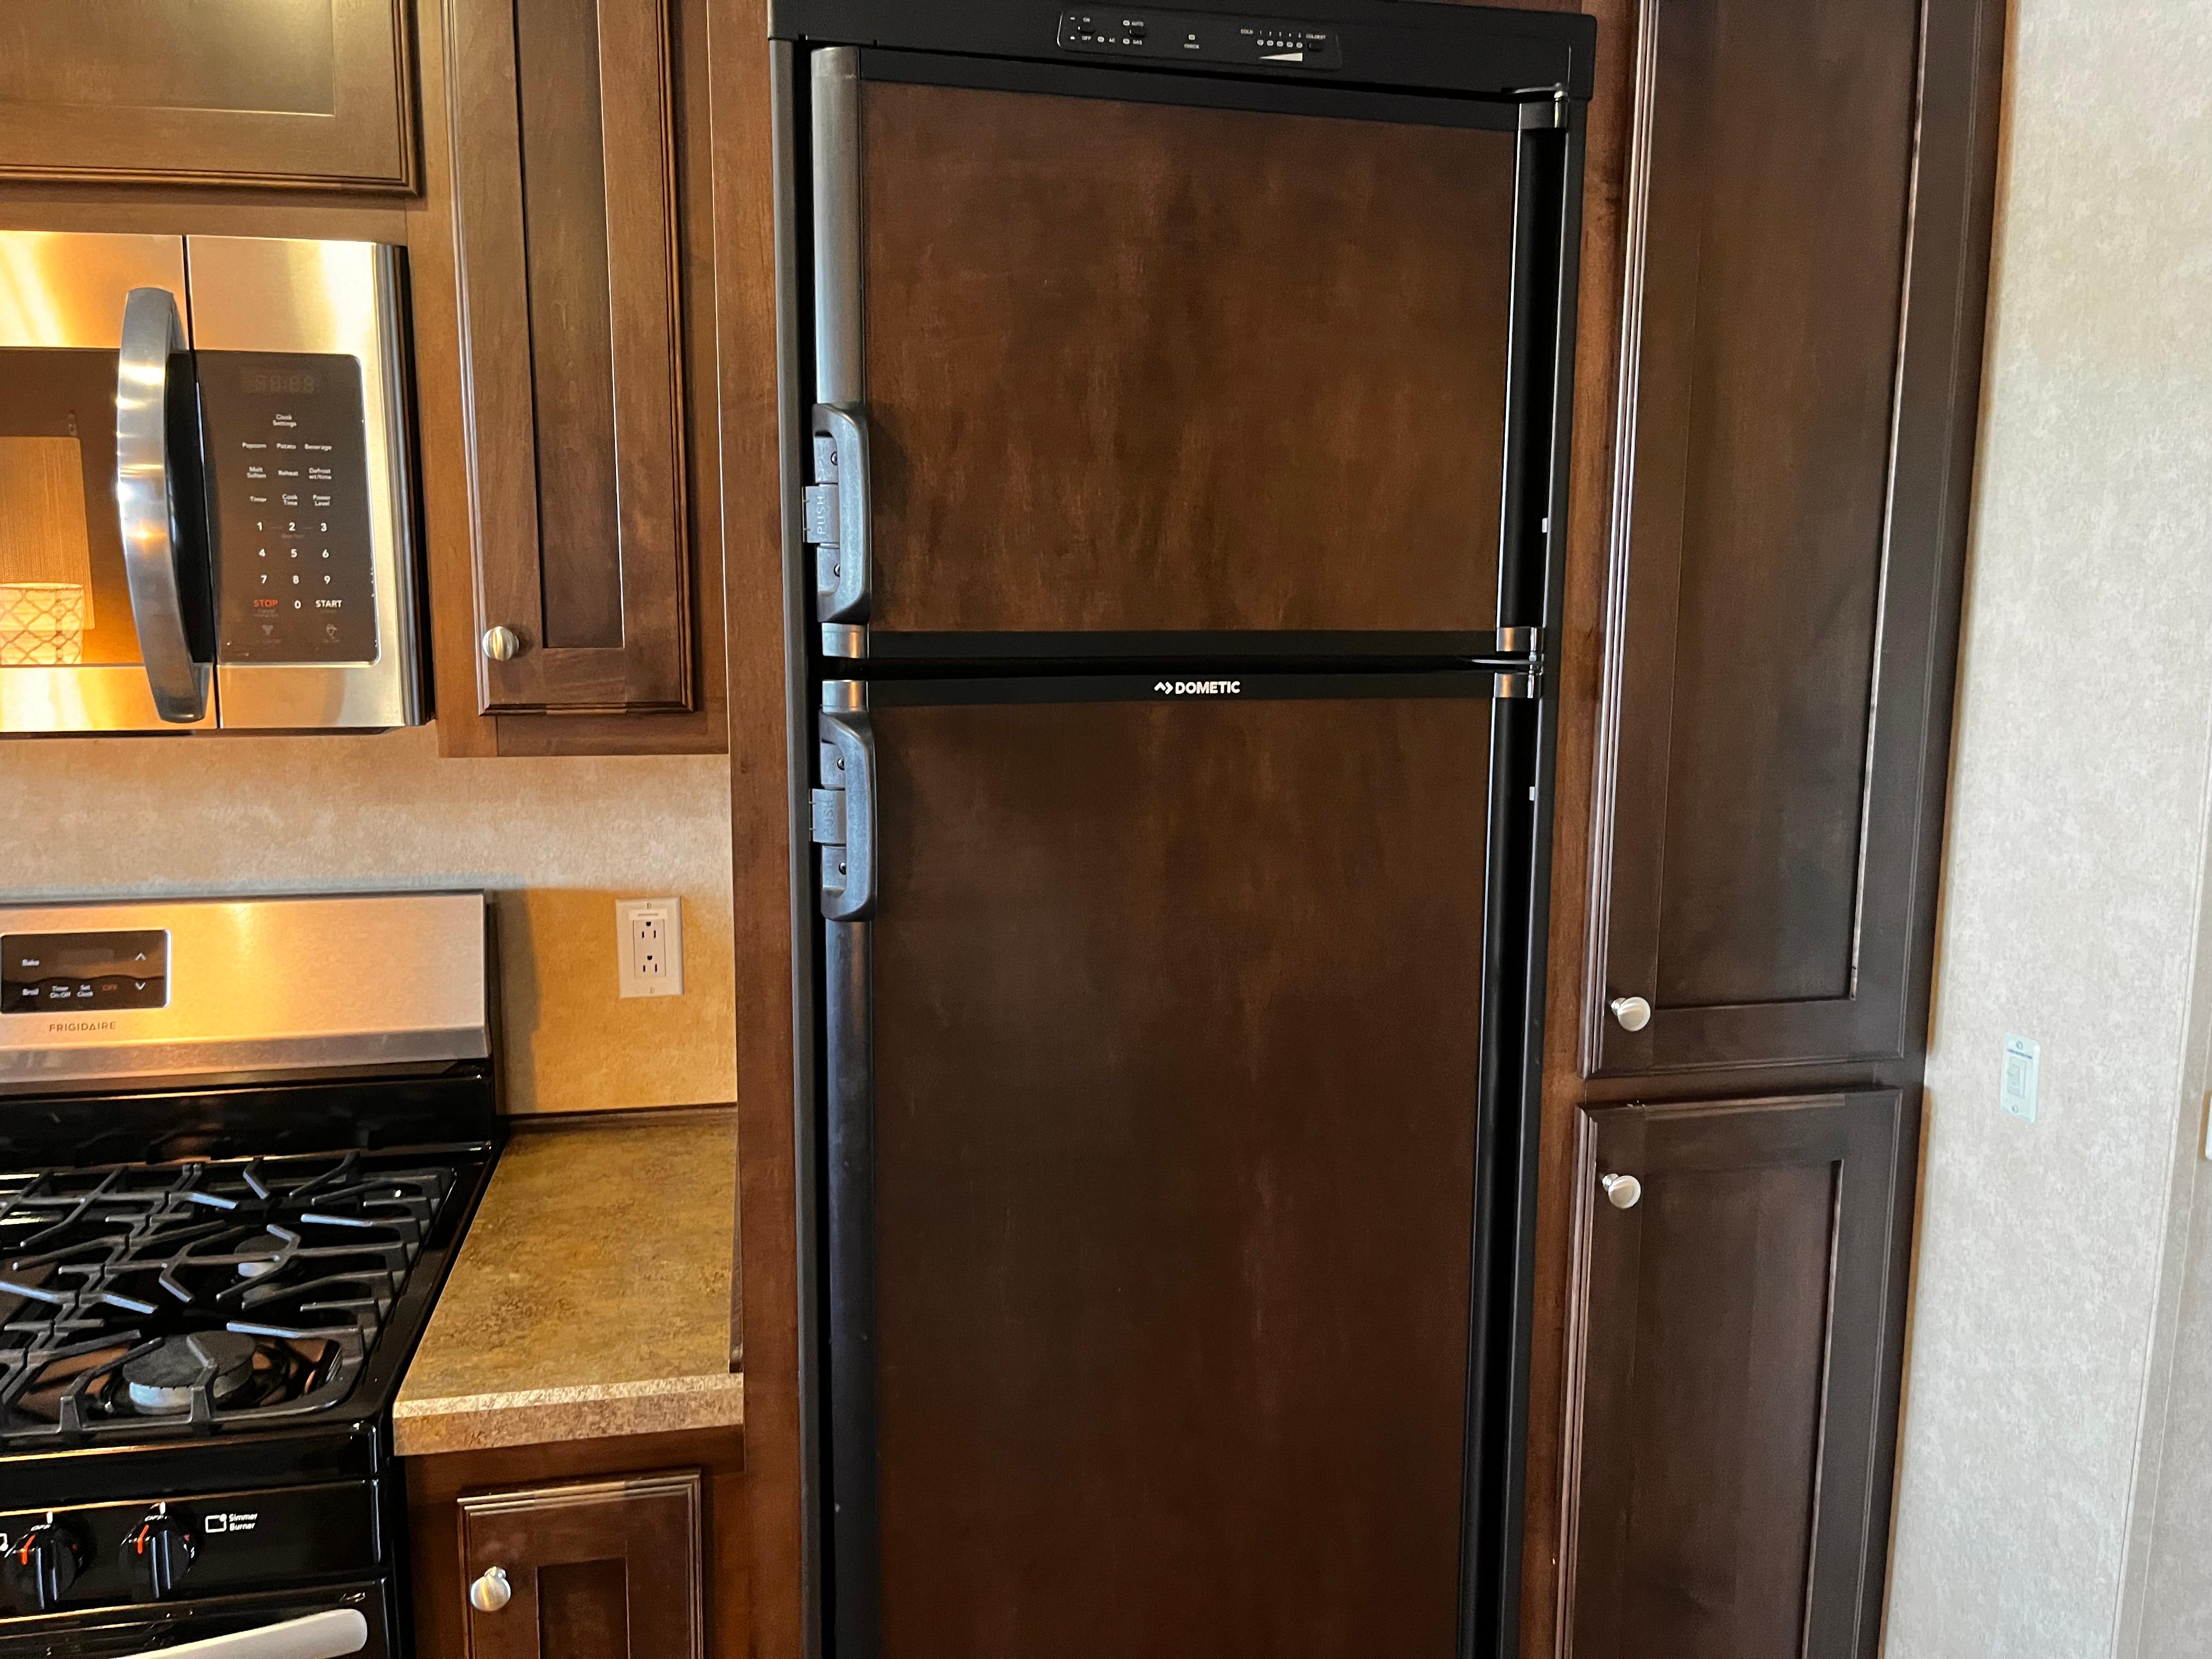 Upgraded refrigerator